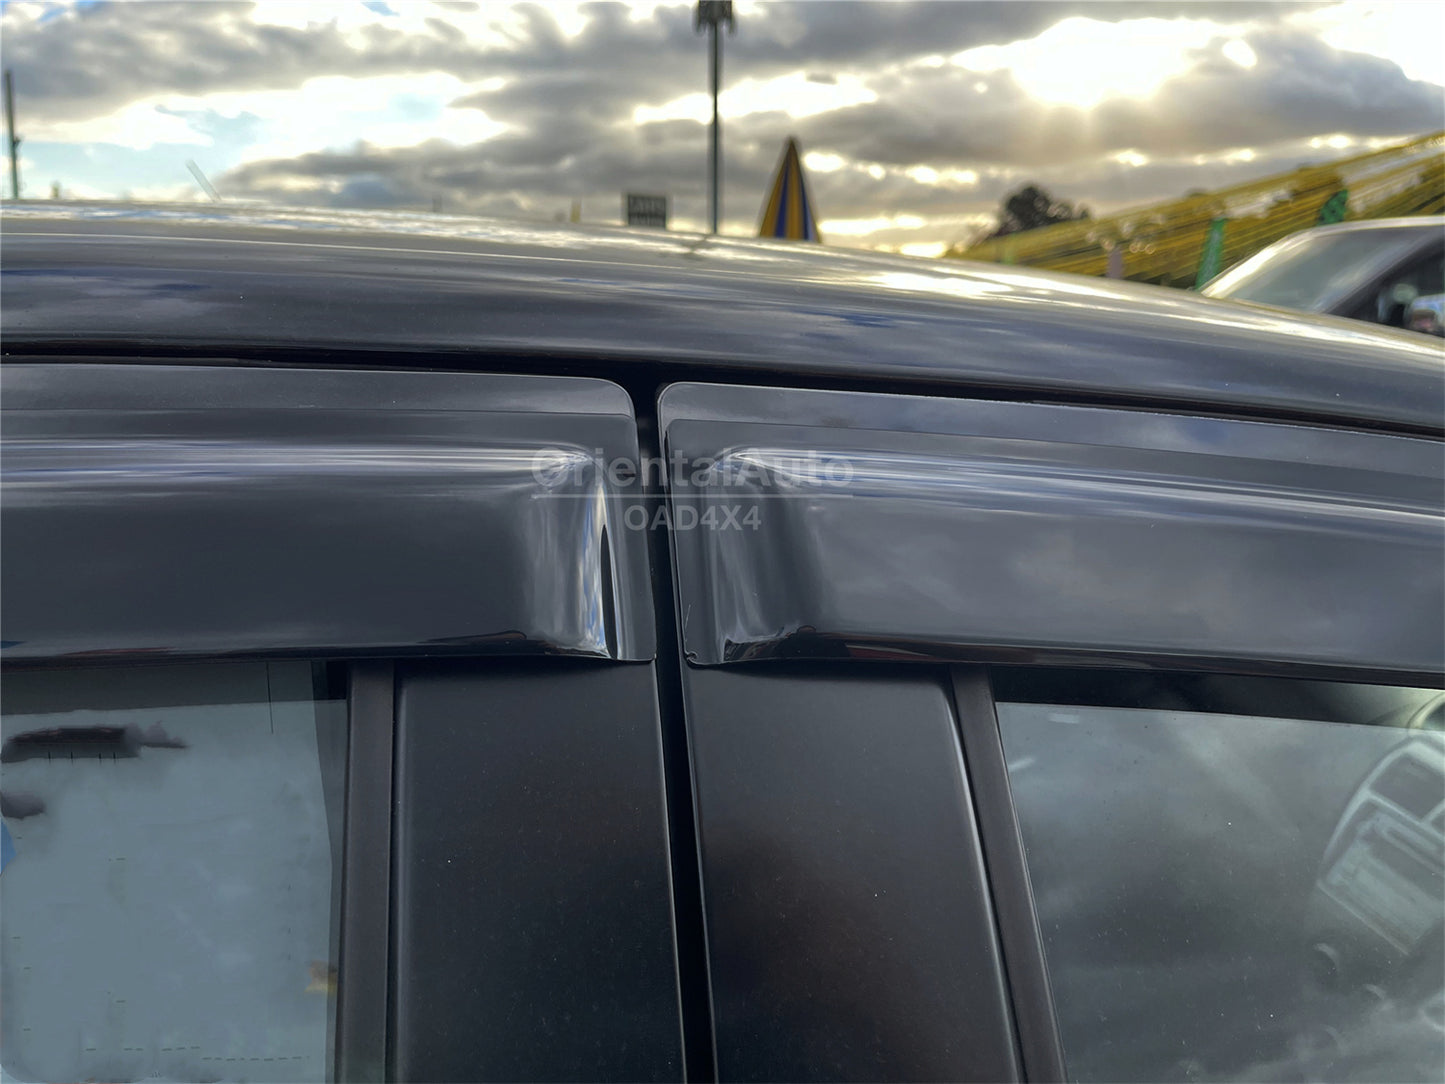 Luxury Weathershields For Toyota Yaris Sedan 2006+ Weather Shields Window Visor